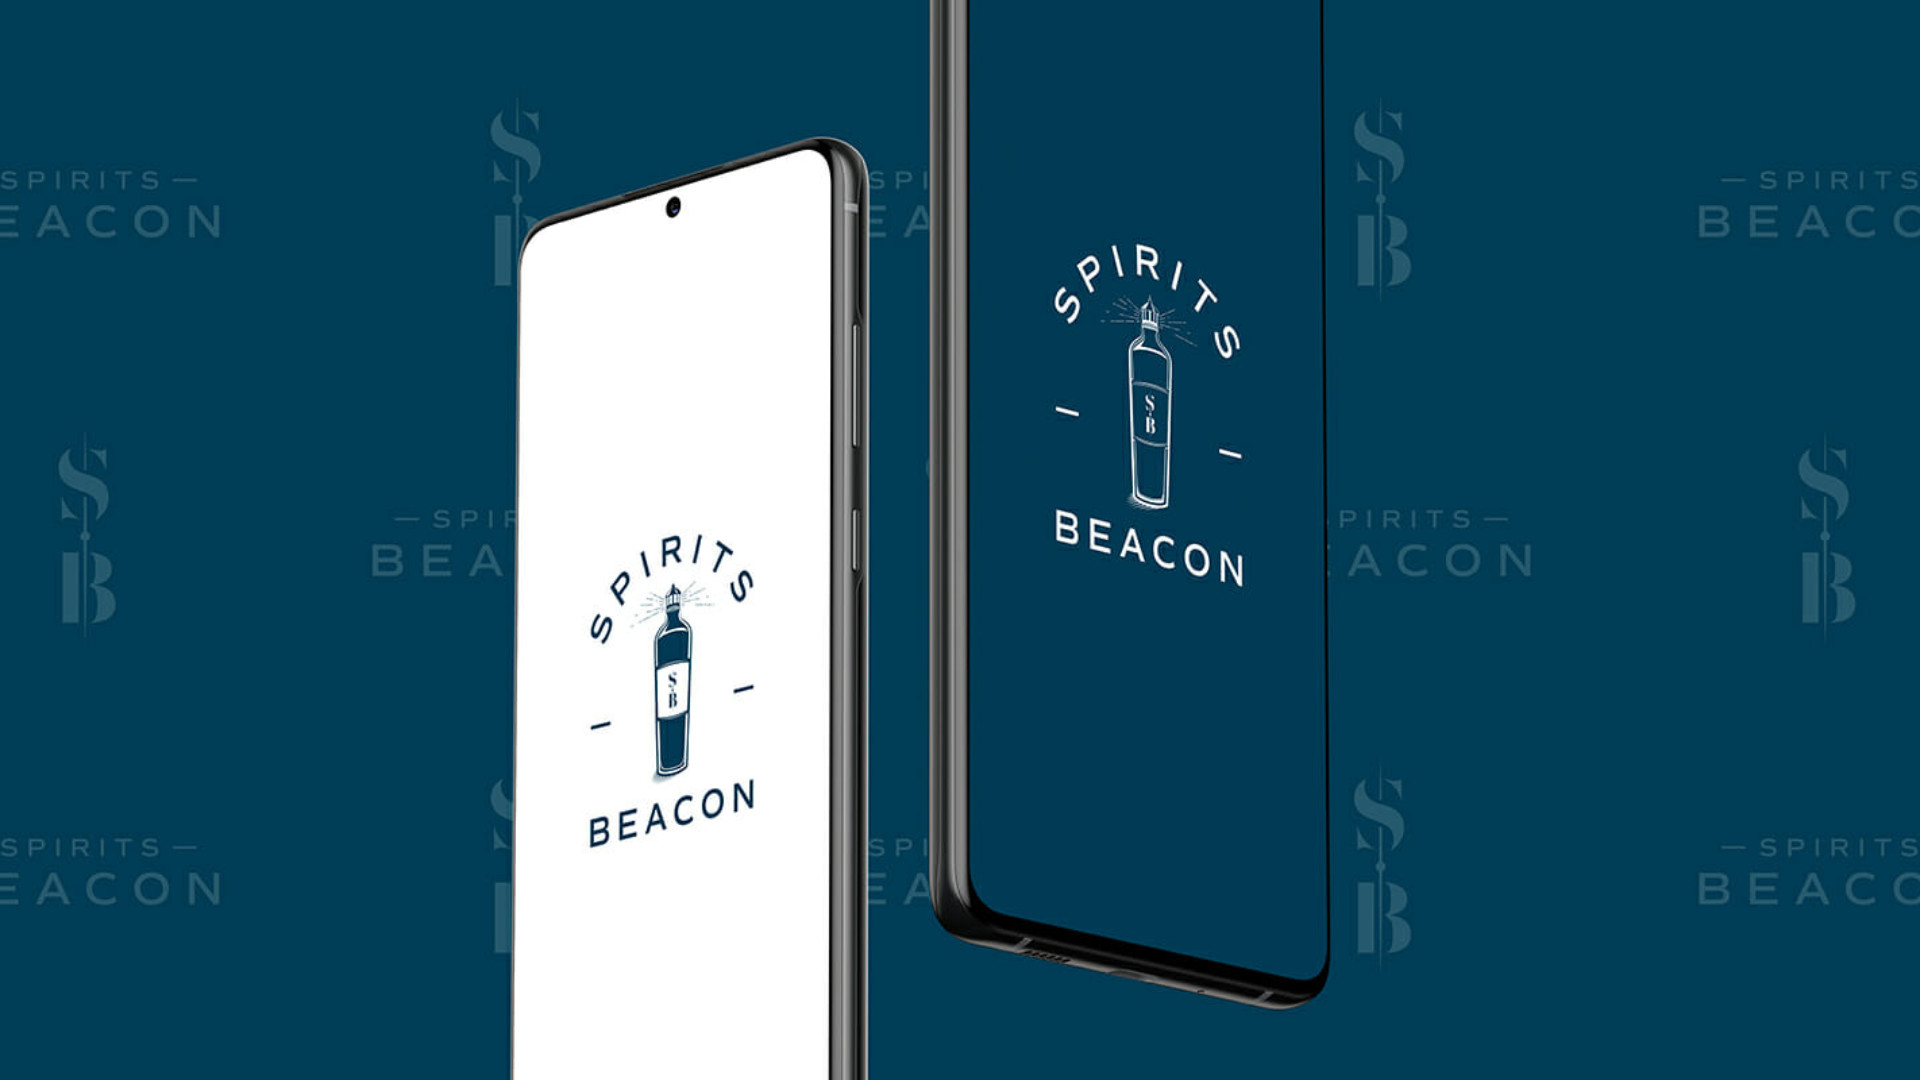 Spirits Beacon Rebranding